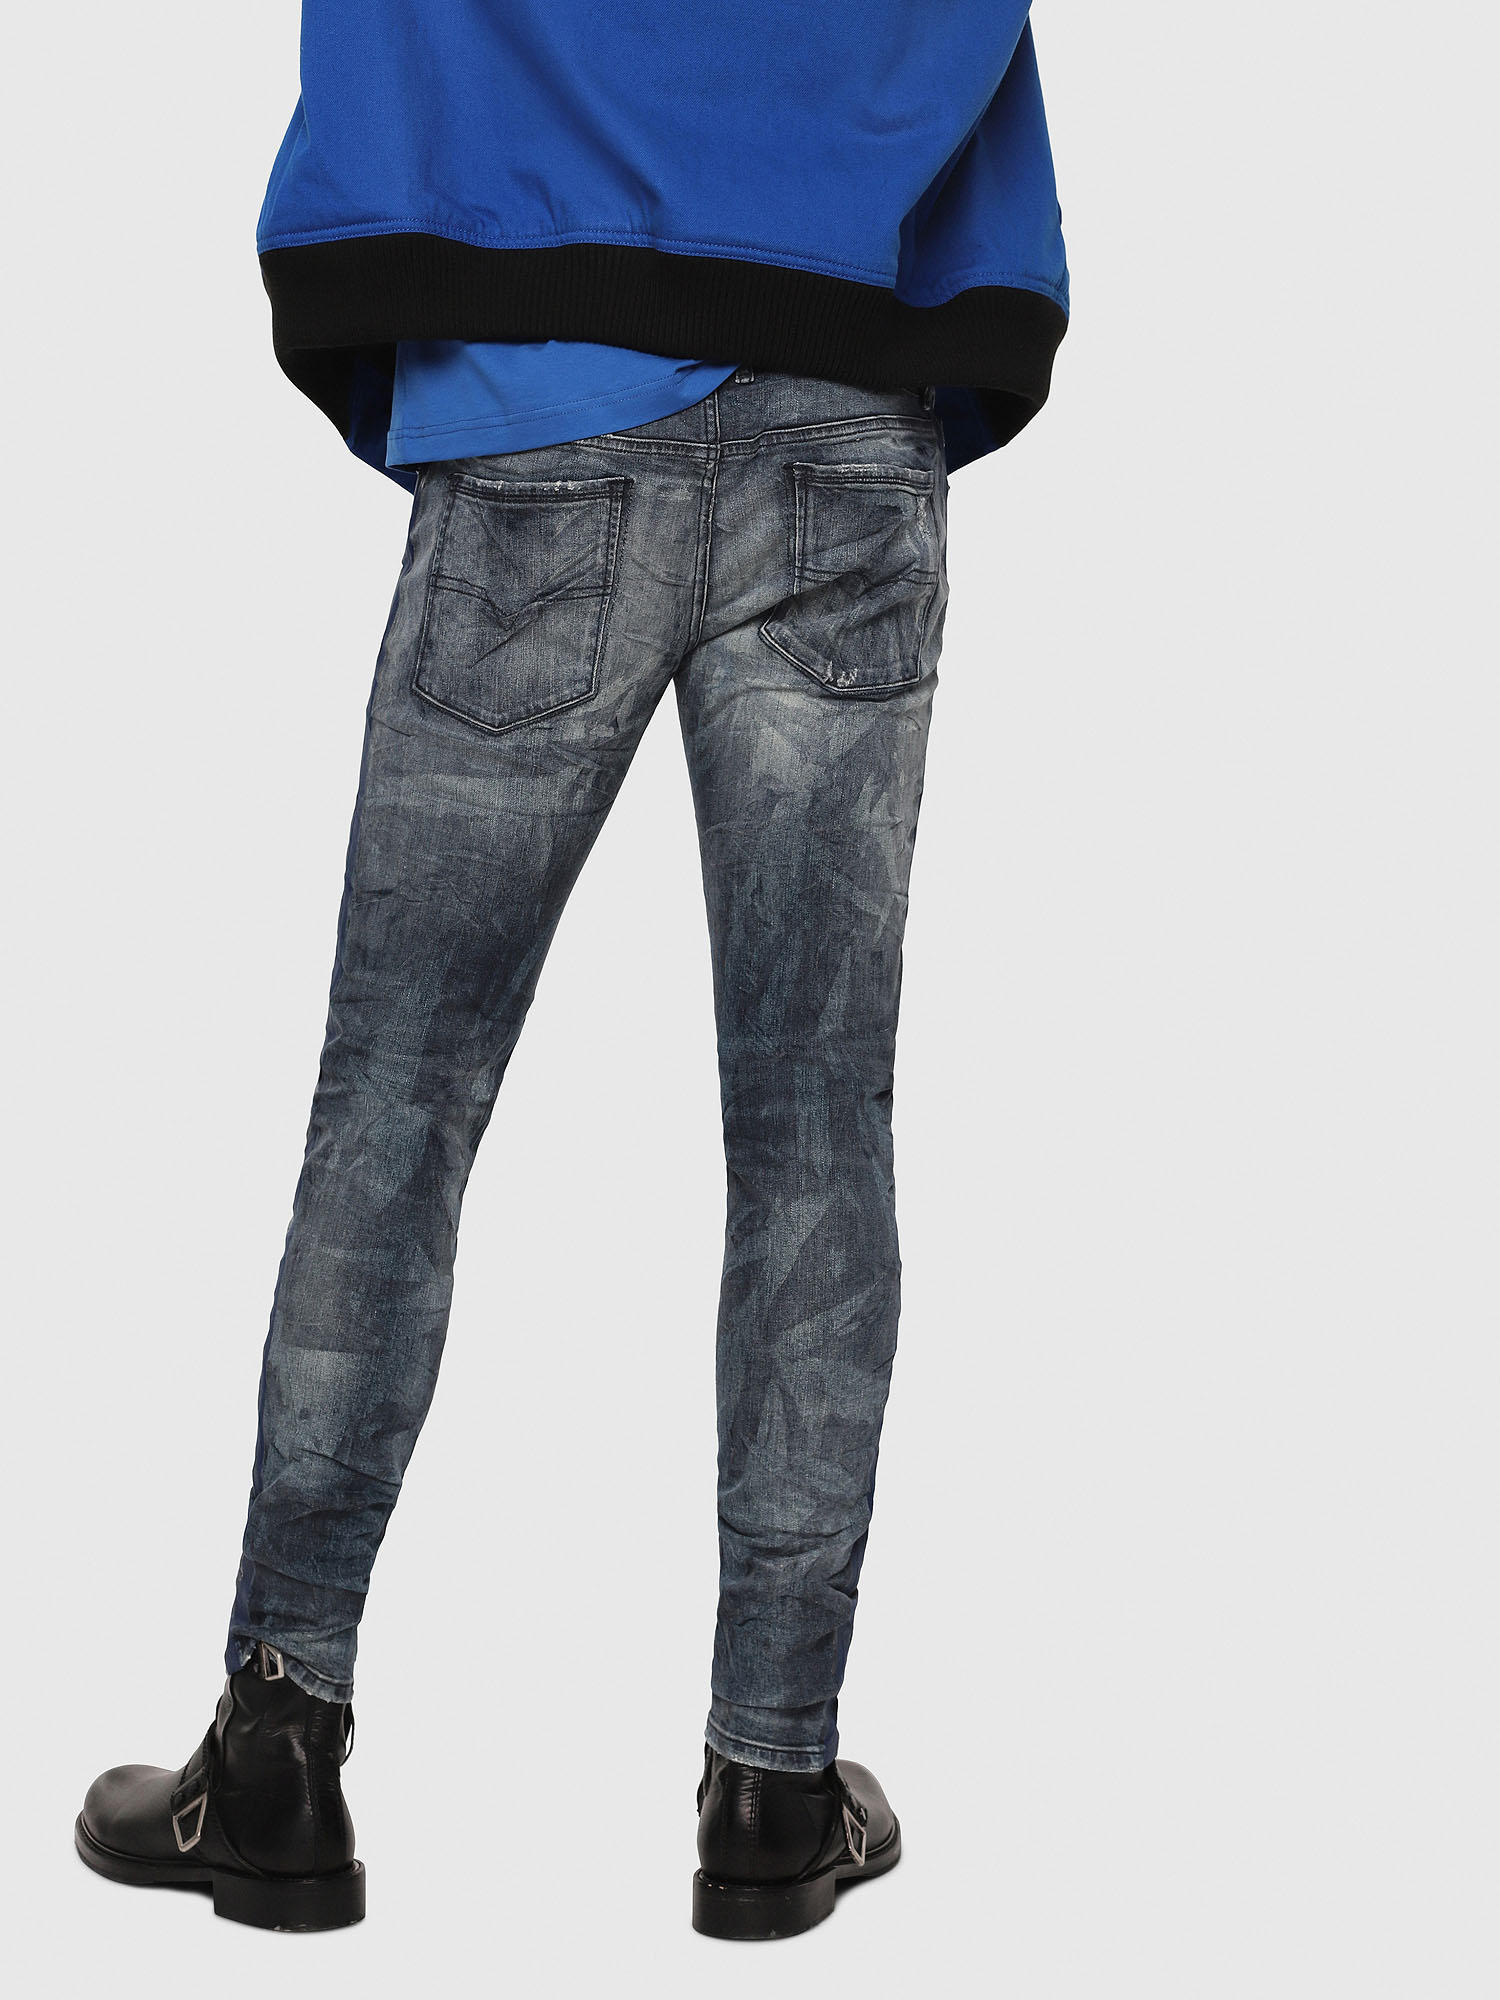 Men's Skinny Jeans | Shop on Diesel Official Store